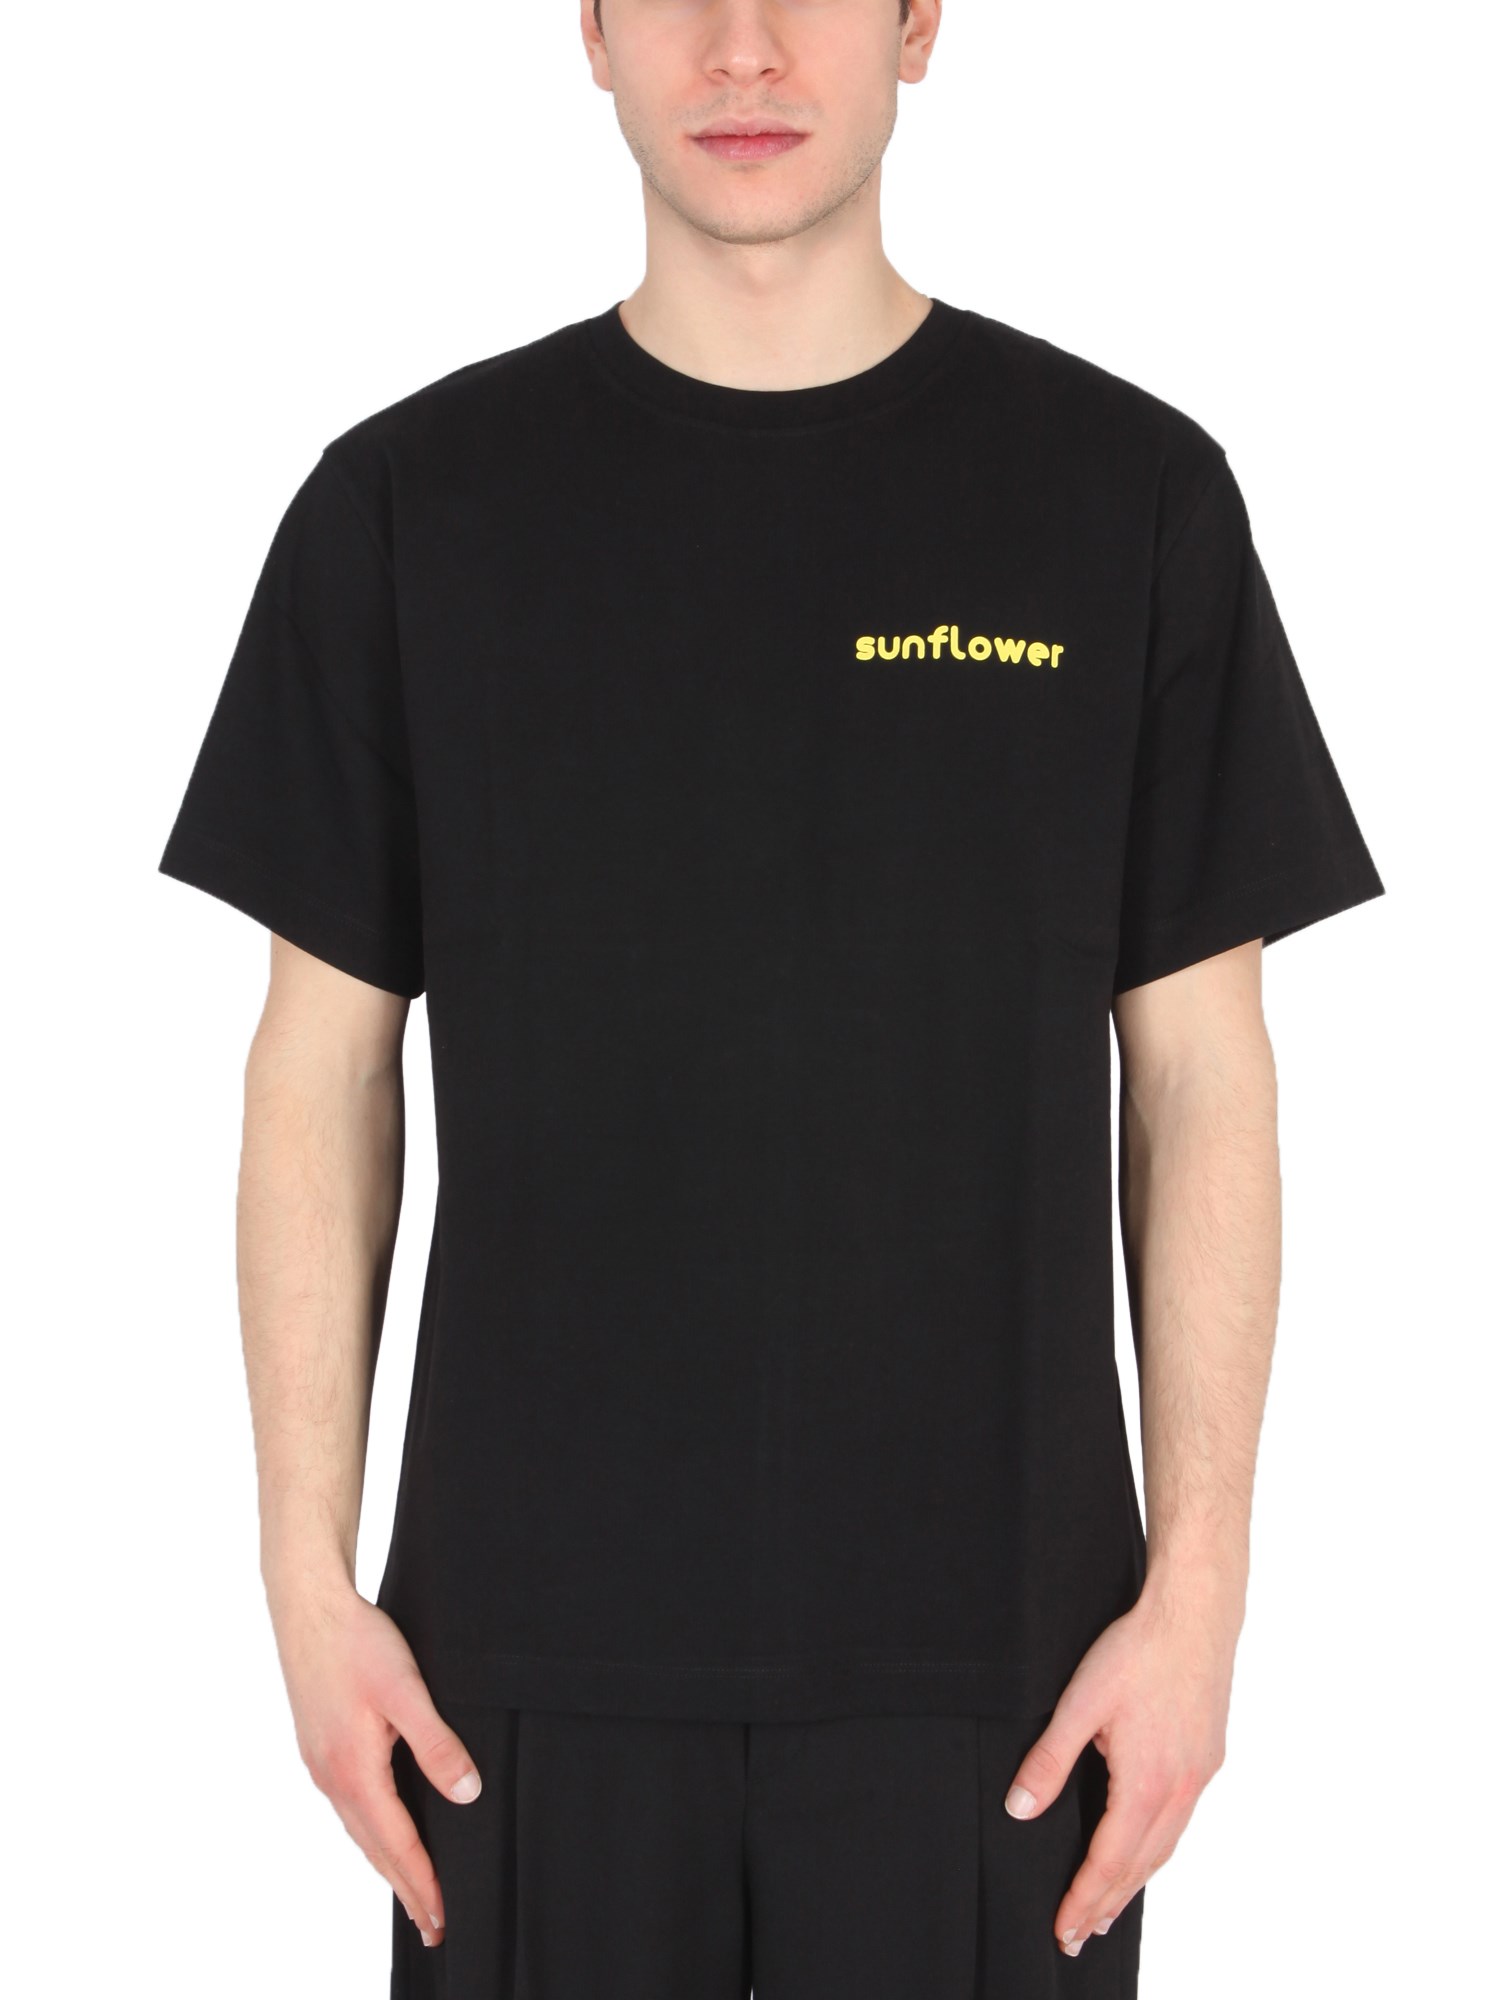 sunflower "heavy college" t-shirt